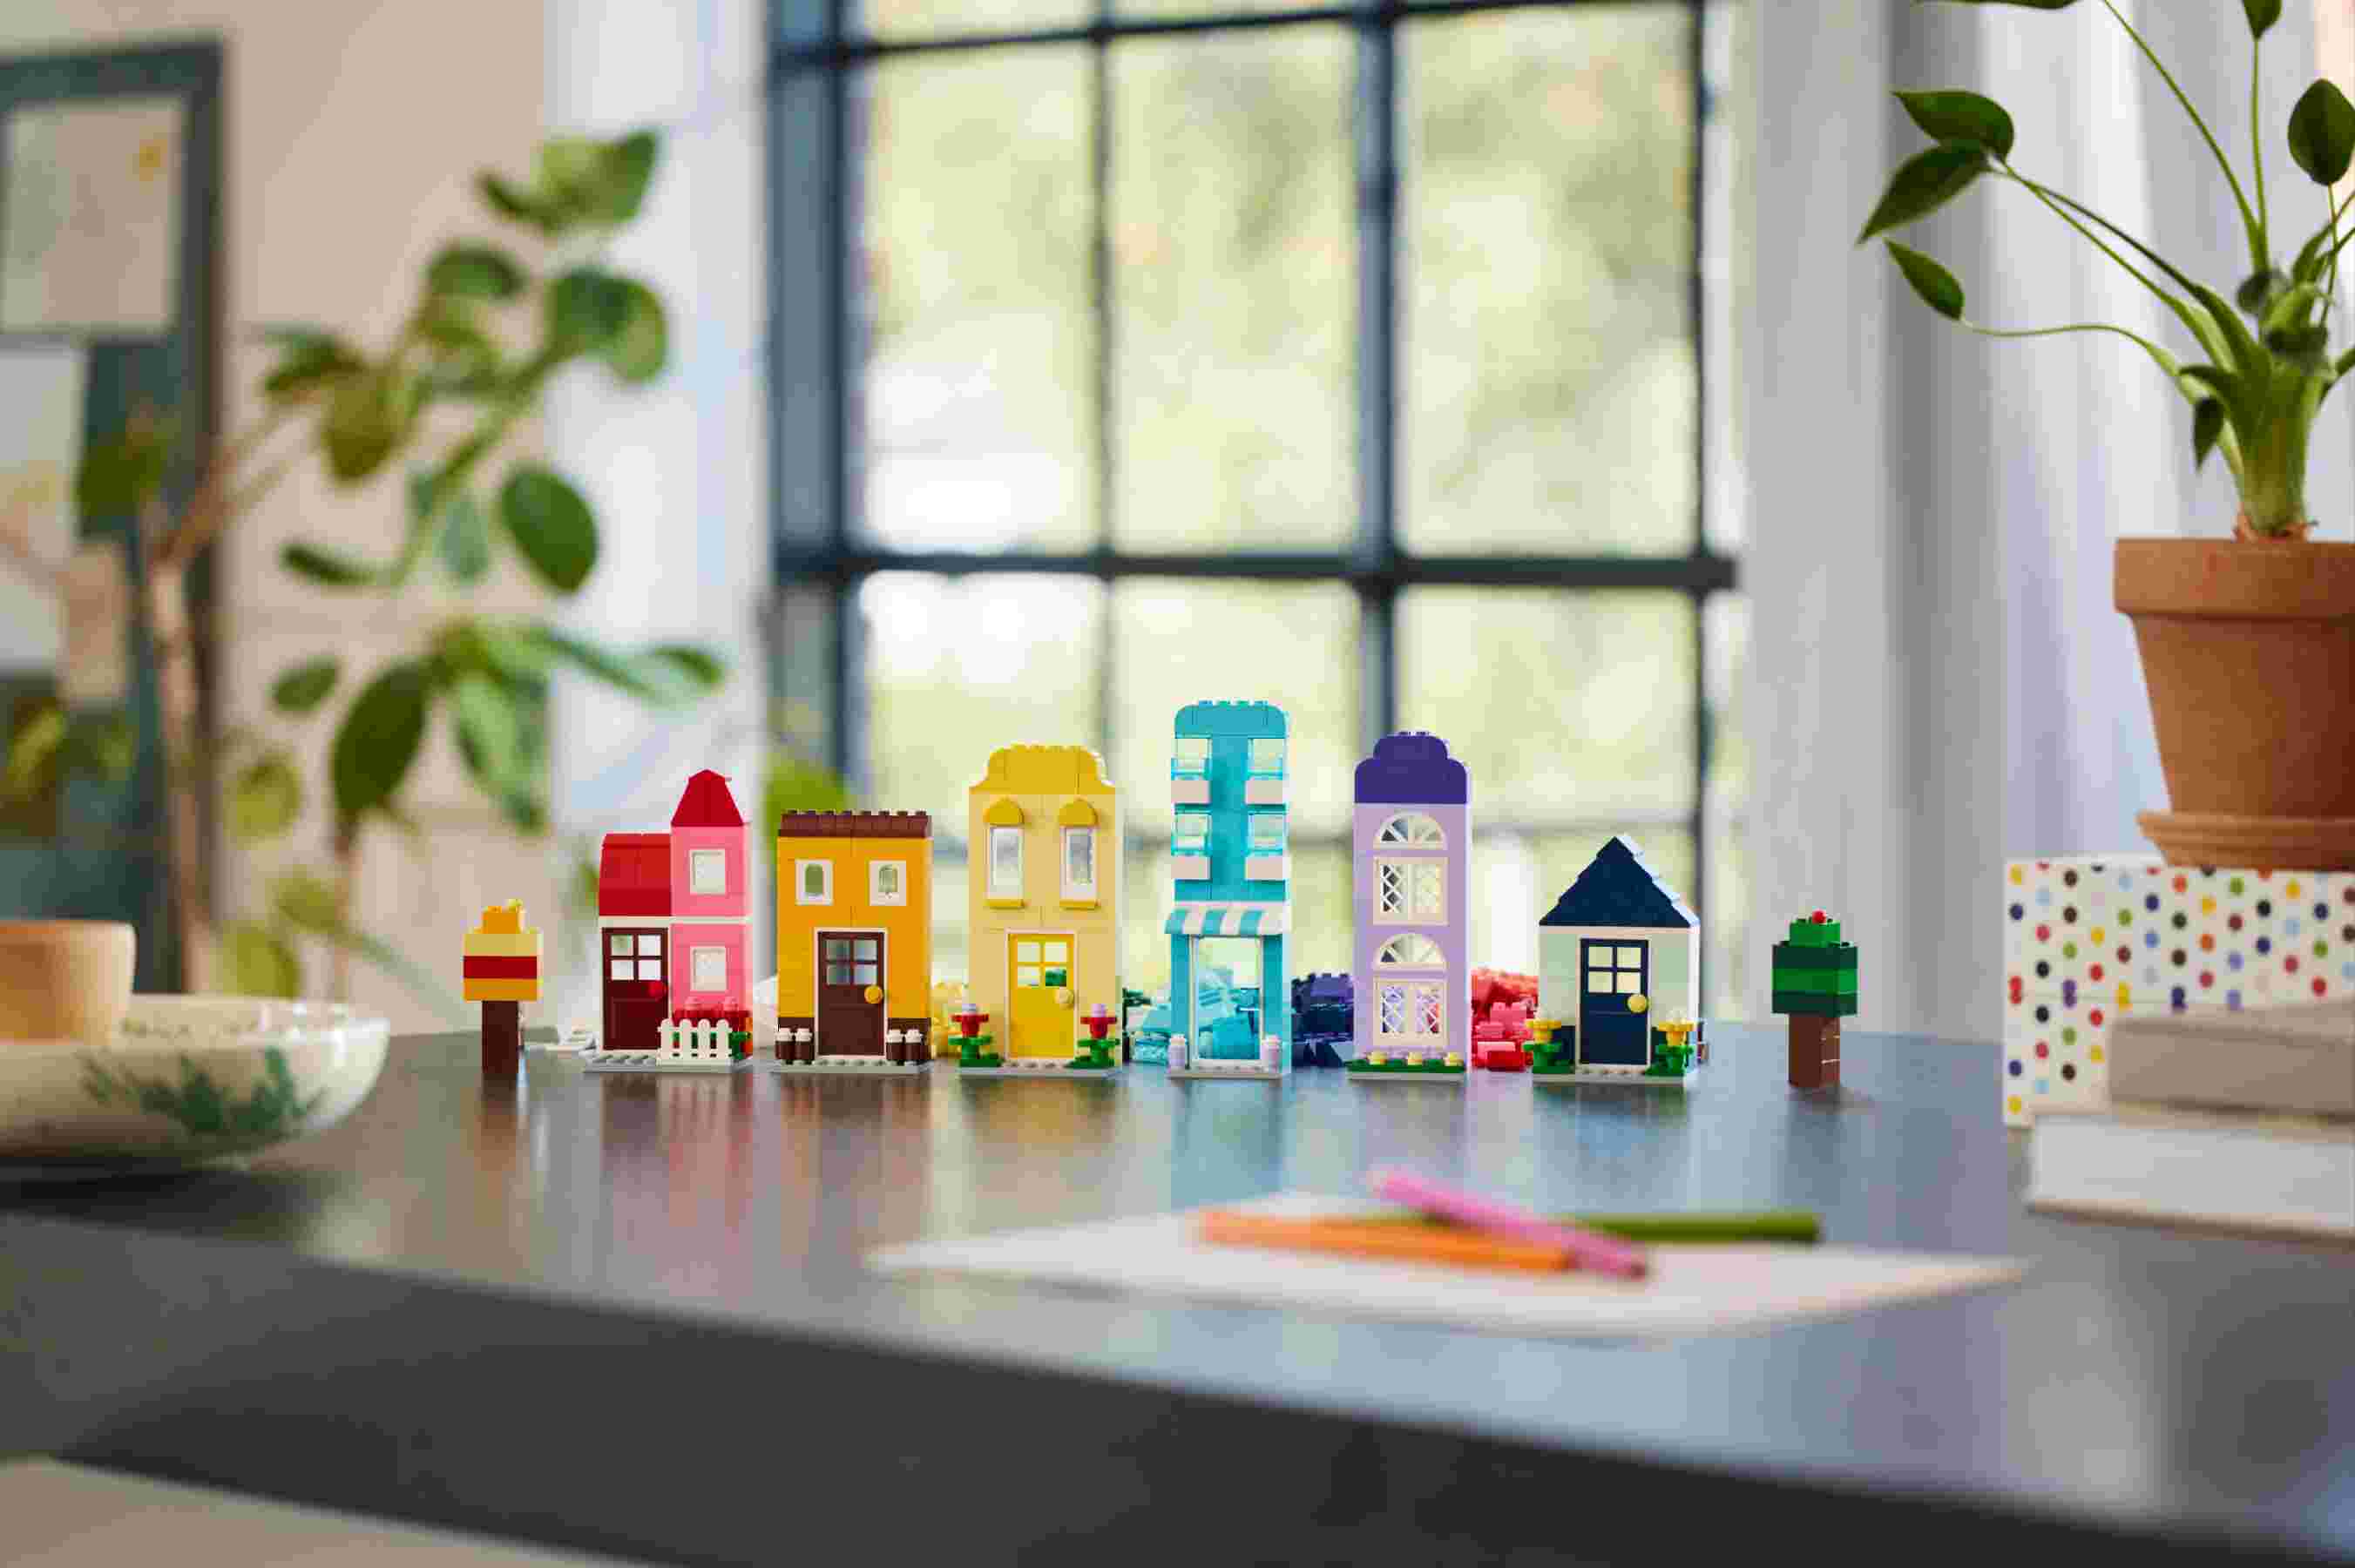 LEGO 11035 Classic Kreative Häuser, inklusive Anleitung mit 8 Bauideen